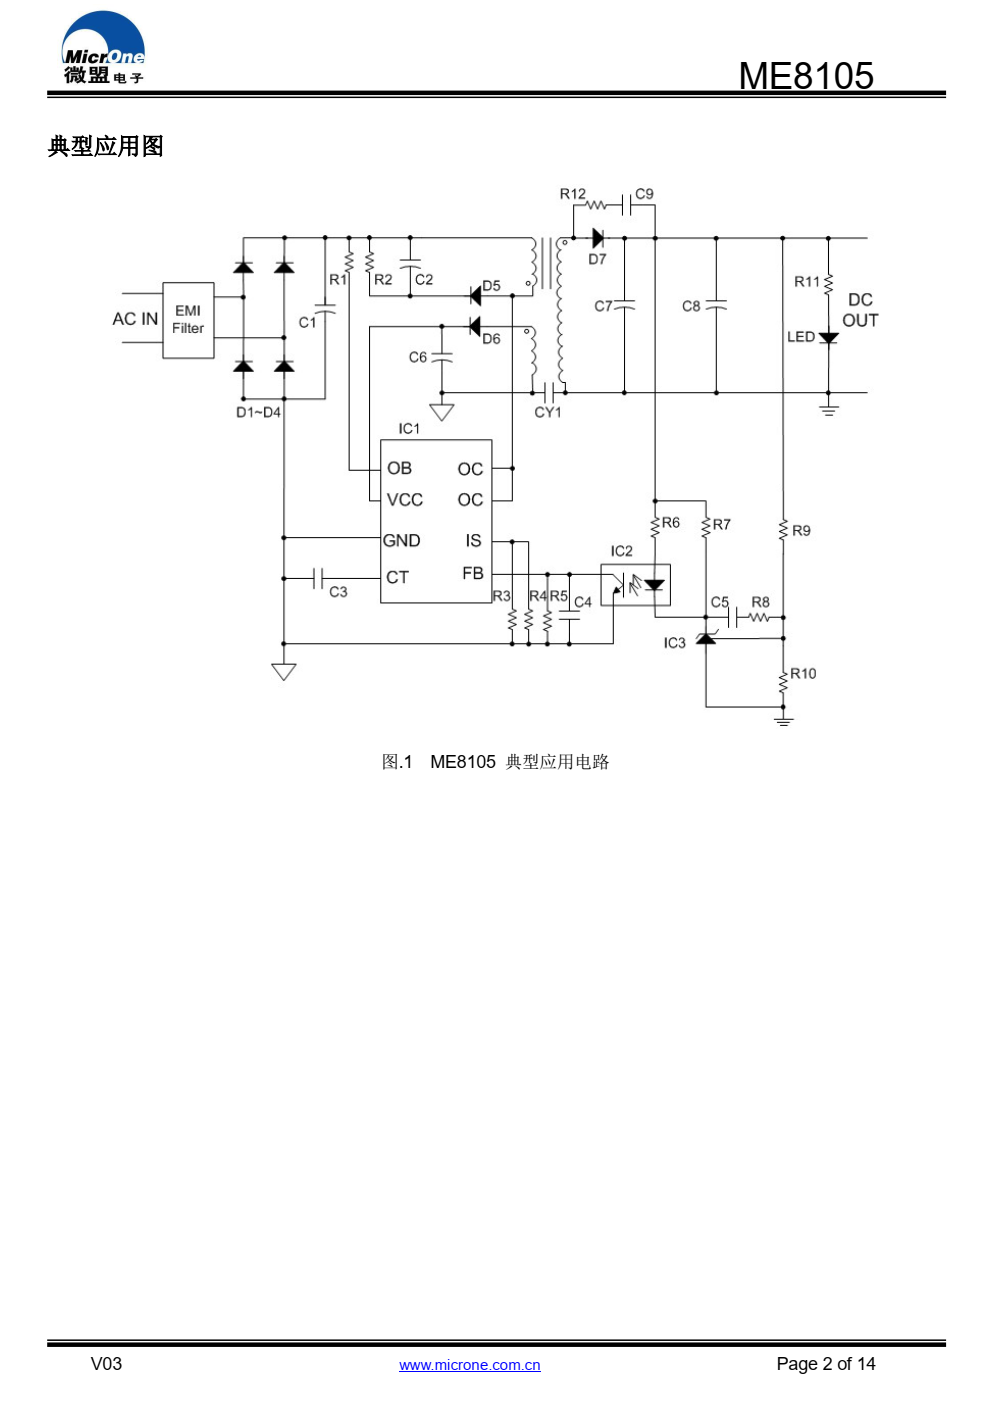 ME8105高性能电流模式PWM控制器，专为高性价比AC/DC 转换器设计